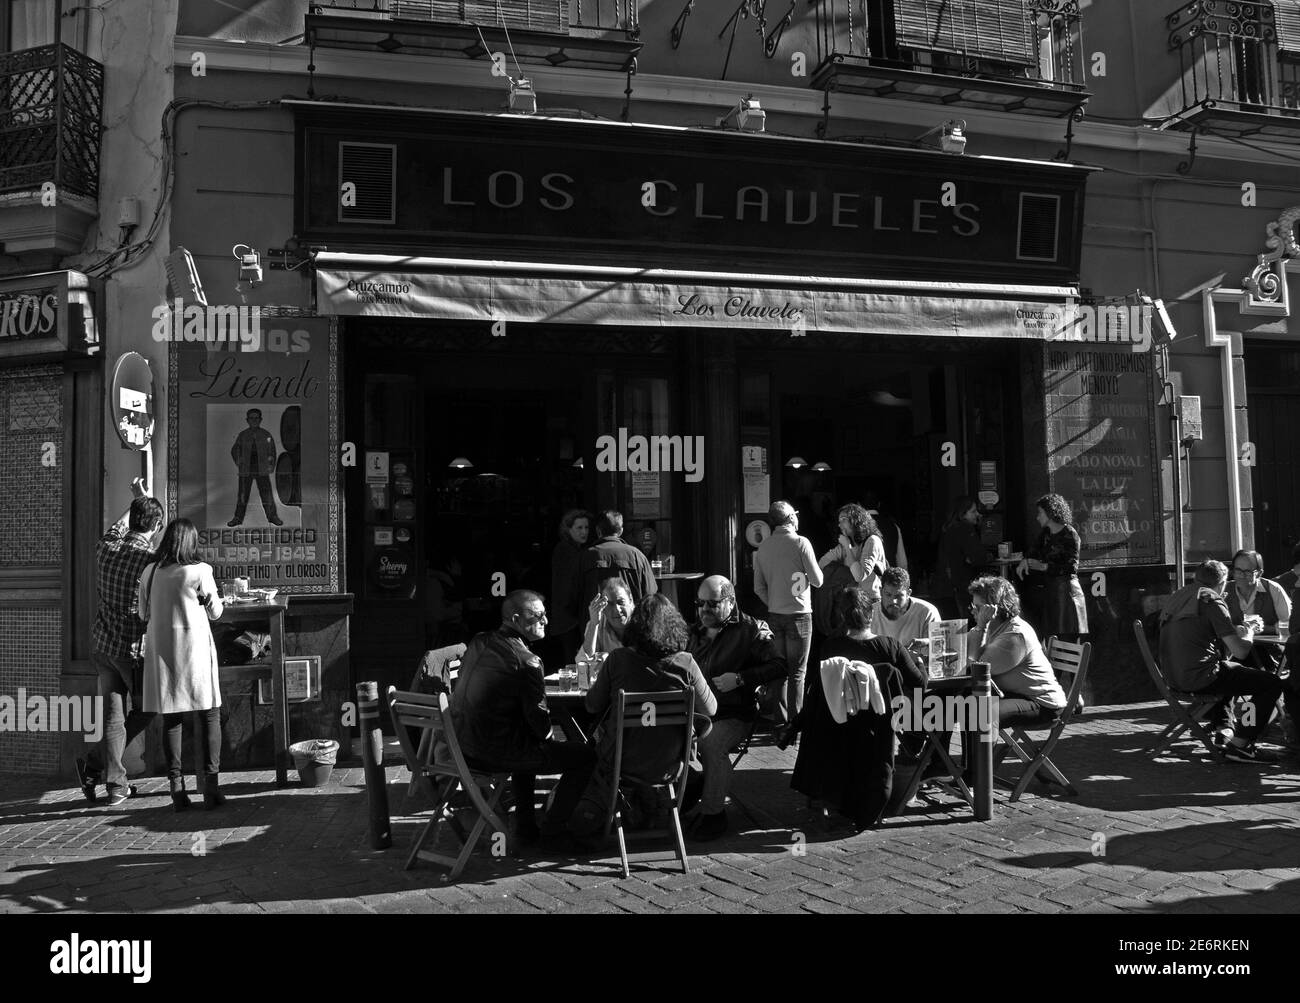 Los Claveles tapas bar, Seville, Spain b&w. Stock Photo